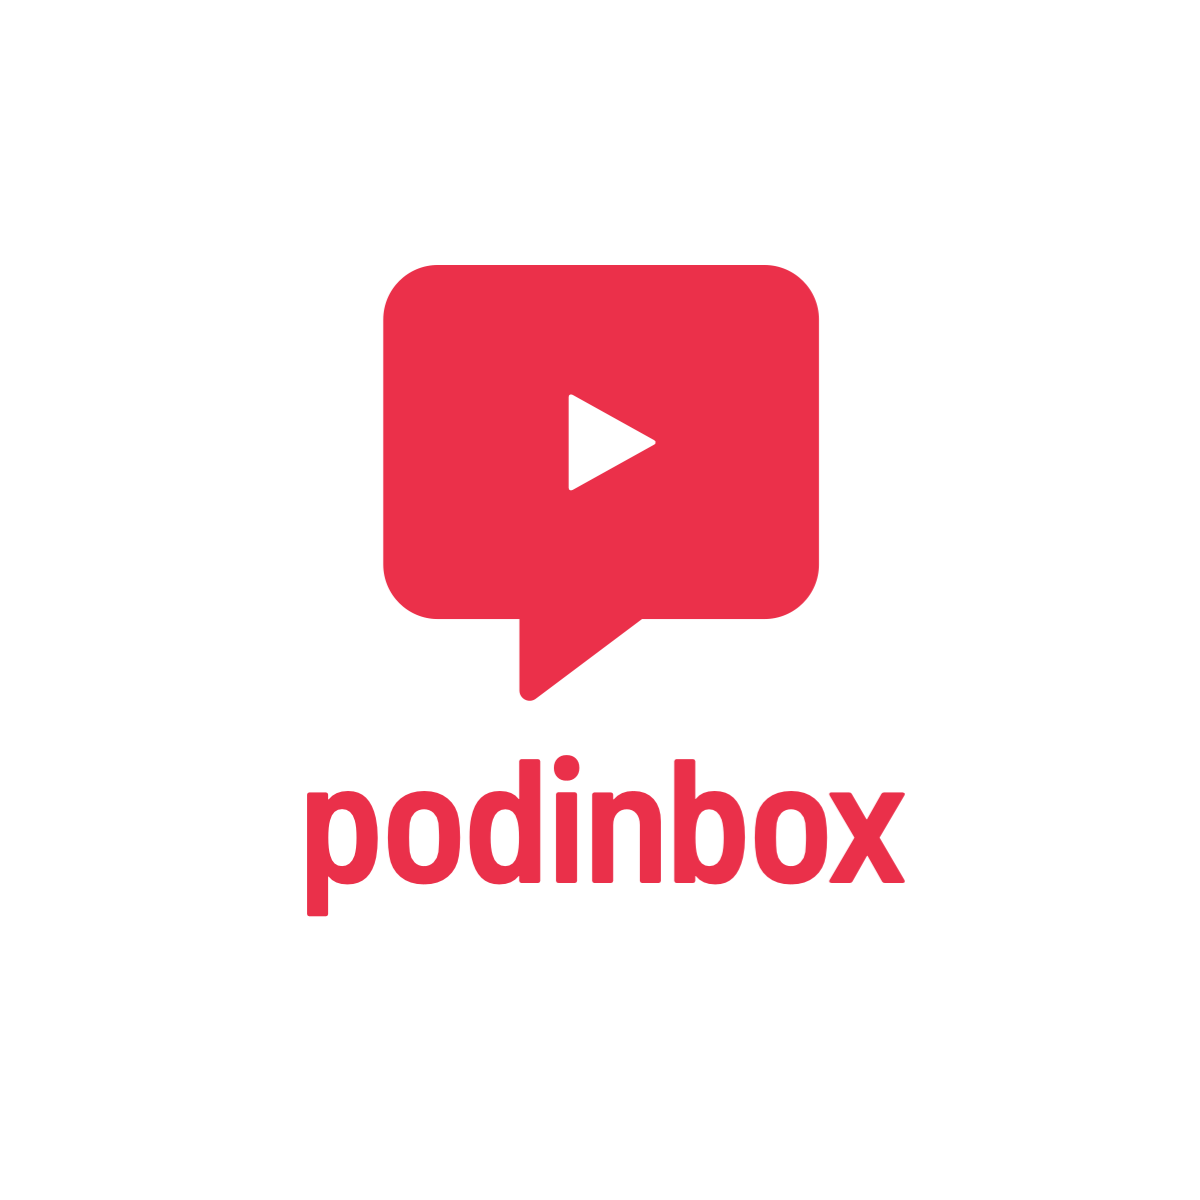 podinbox logo square red